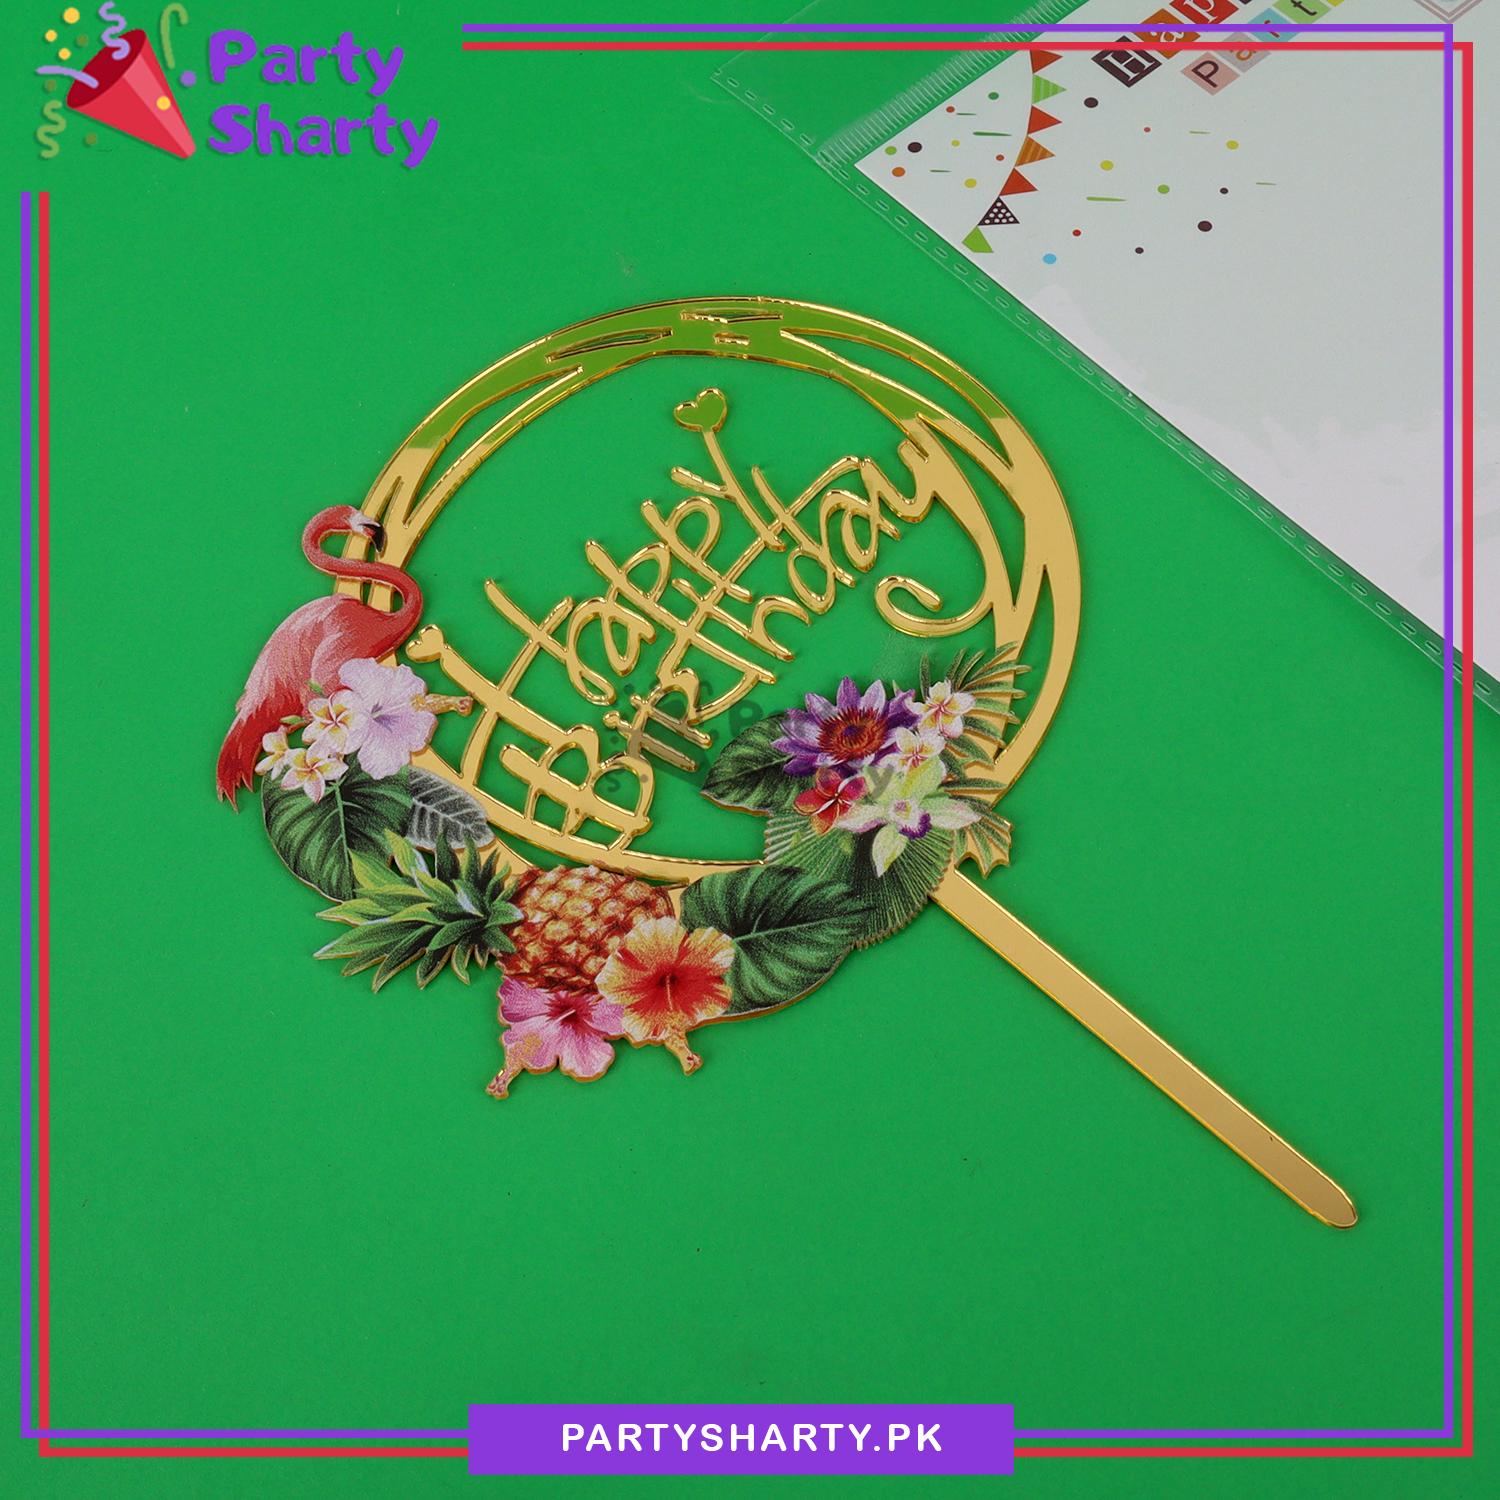 Happy Birthday Flamingo Theme Round Acrylic Cake Topper for Tropical Theme Based Party Decoration And Celebration